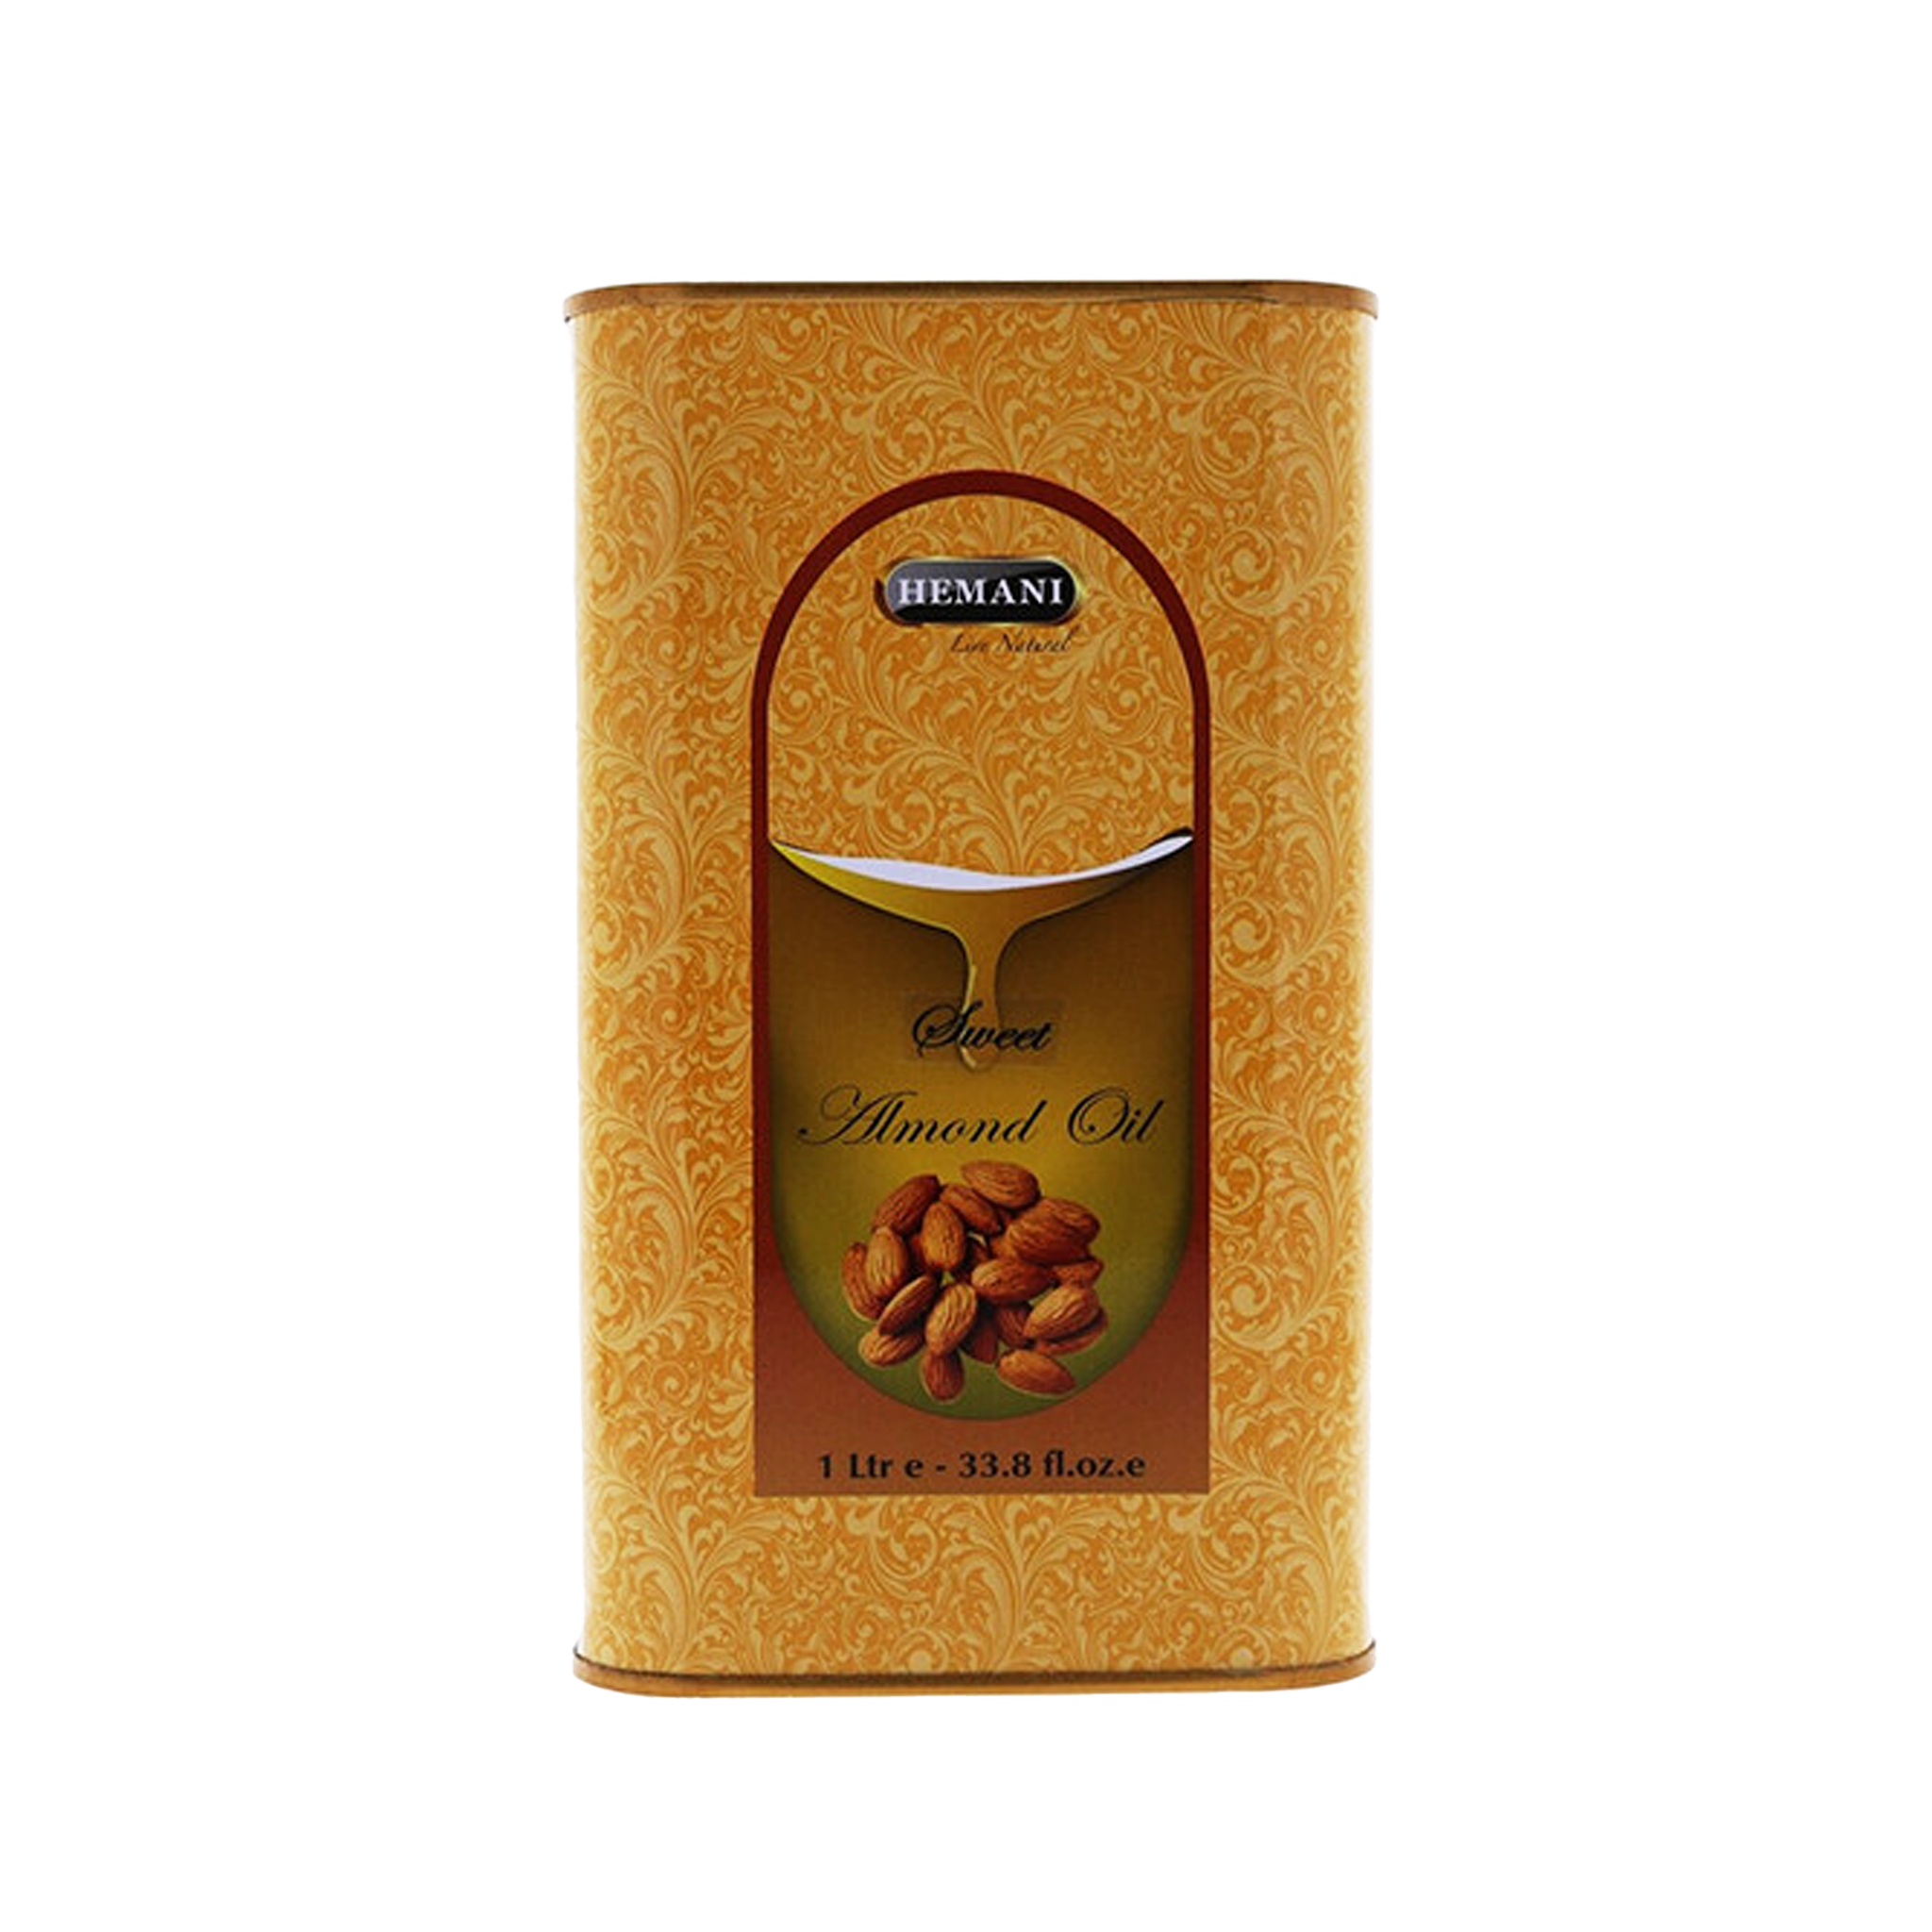 Hemani Herbal Oil Sweet Almond Oil 1L